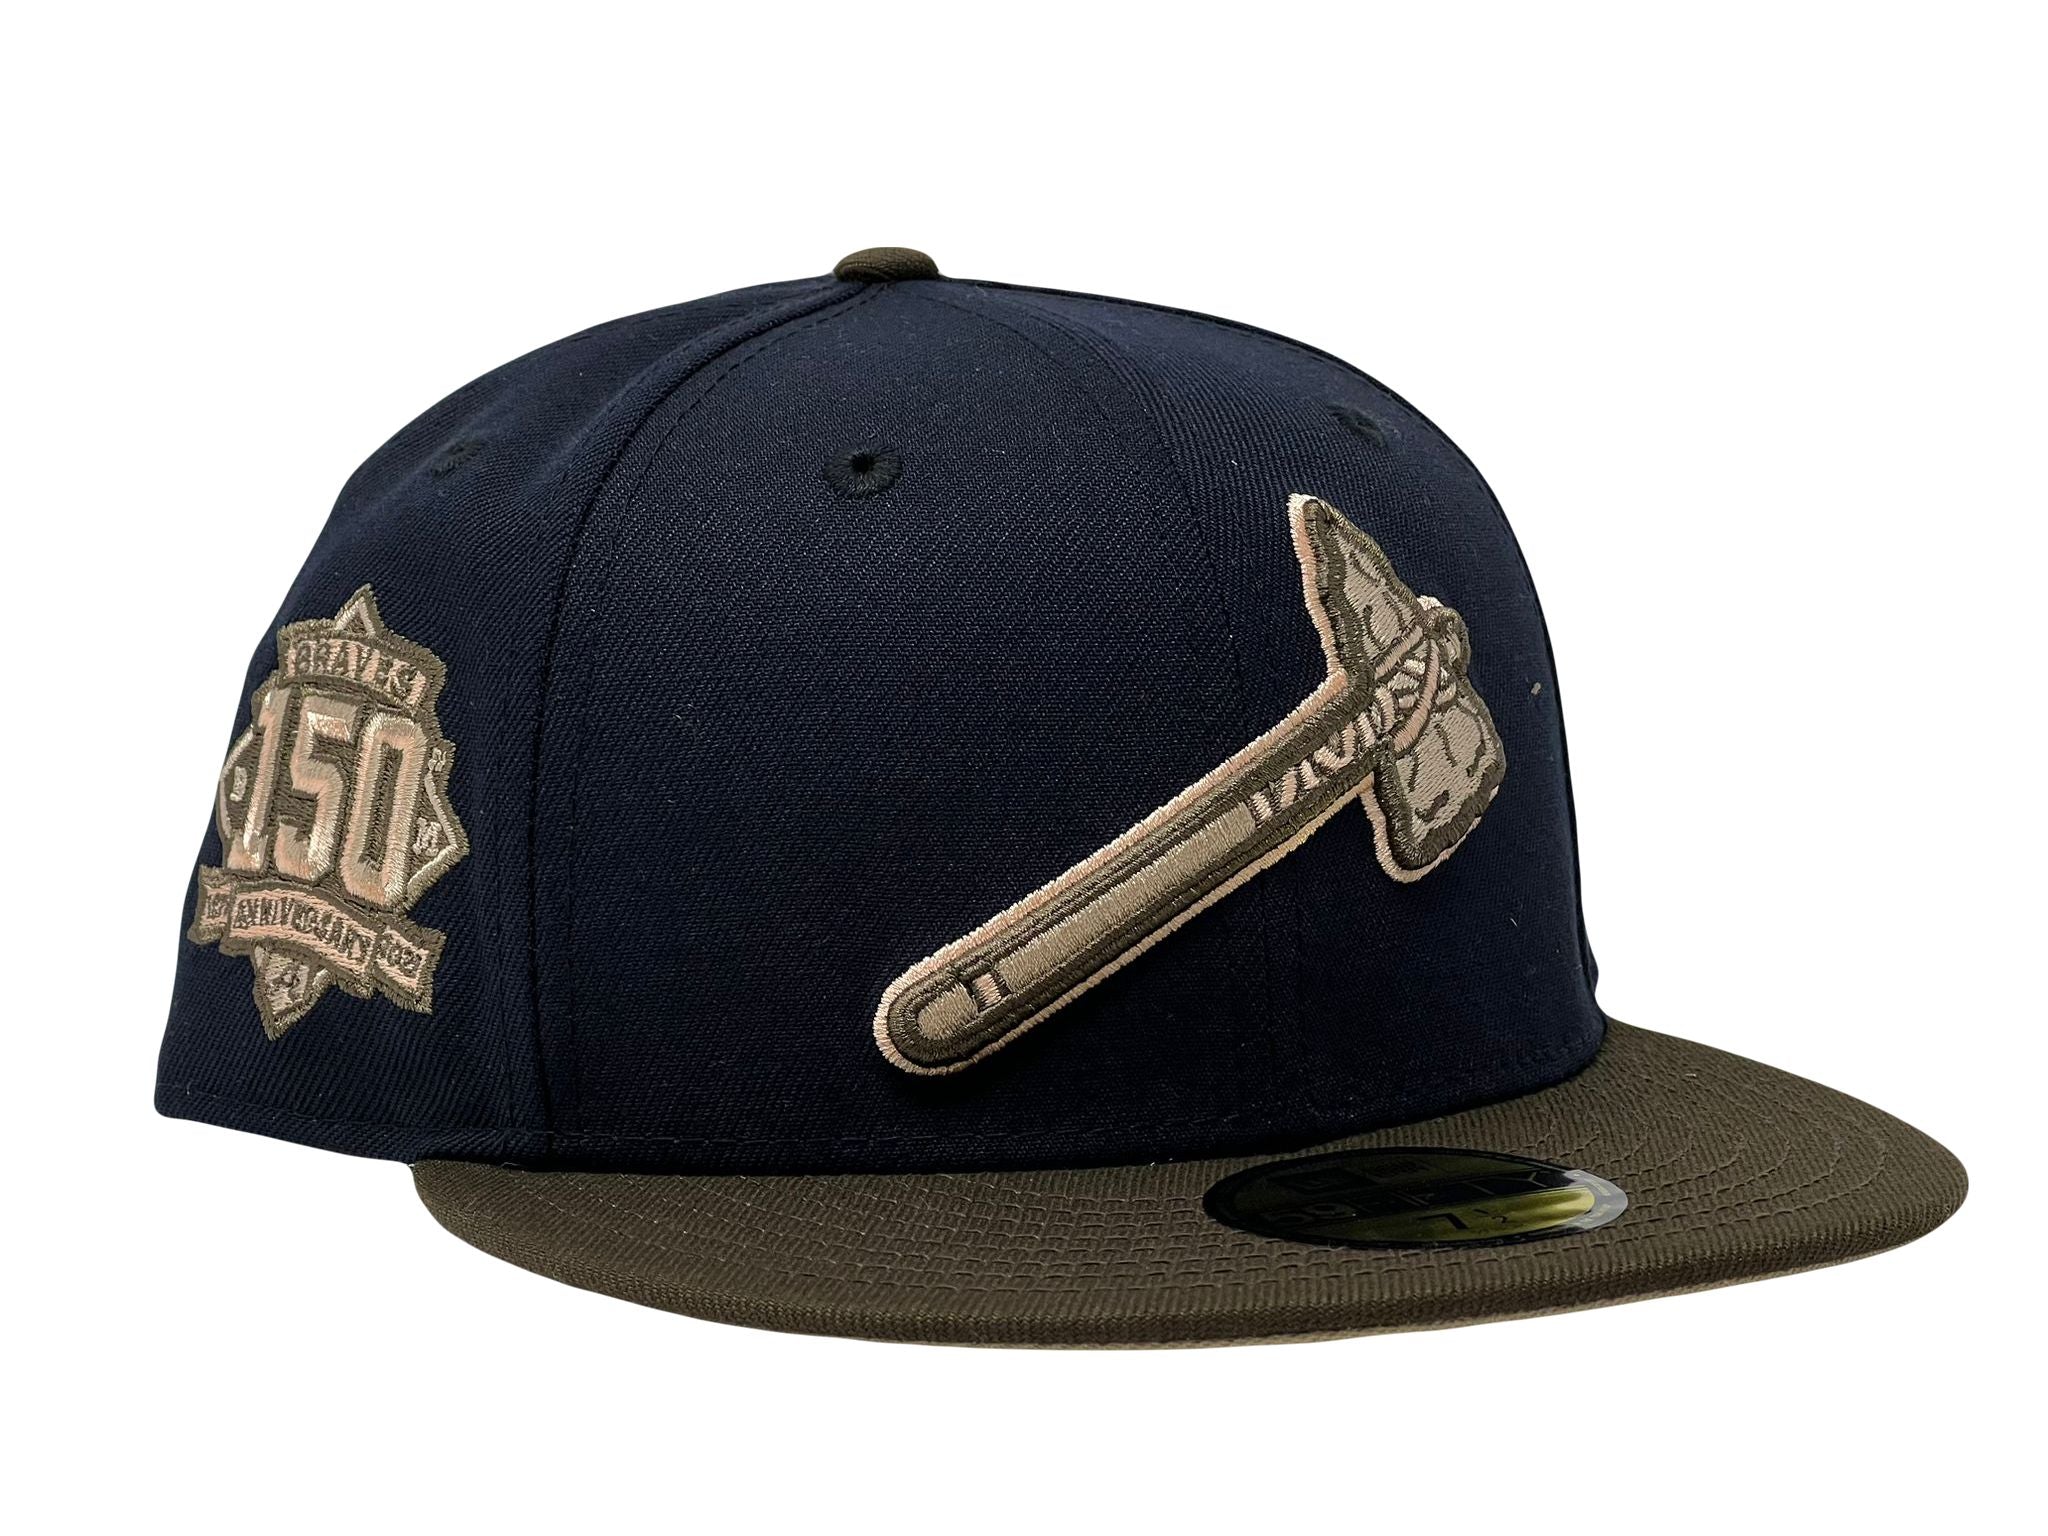 New Era Atlanta Braves Black Fitted Hat MLB 2021 World Series Patch Gray  U/V Cap